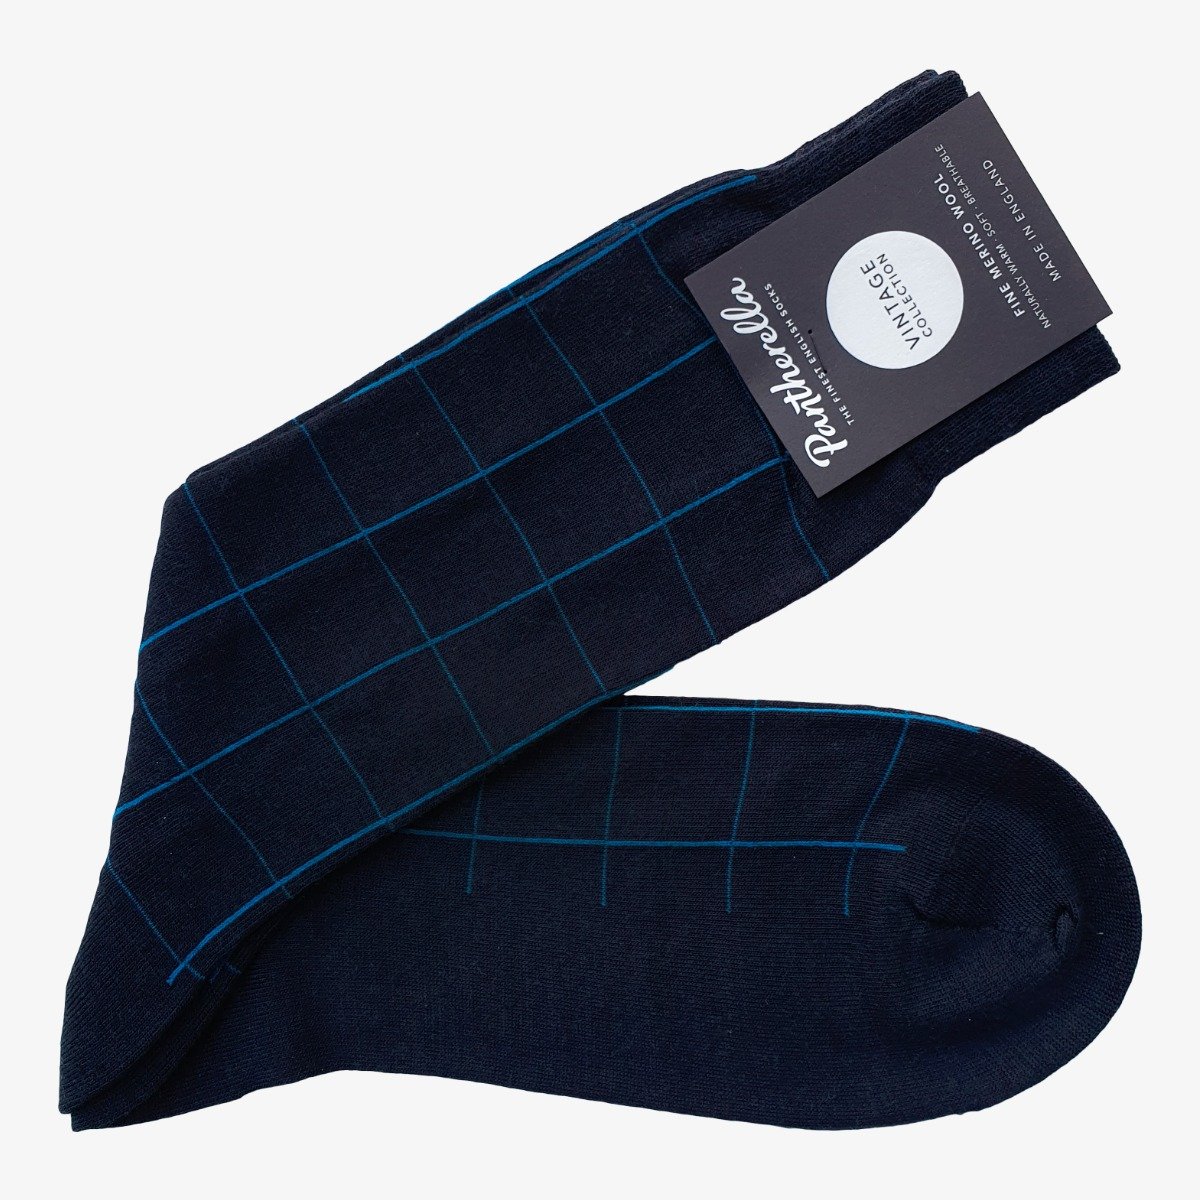 Pantherella Westleigh navy windowpane merino wool men's socks